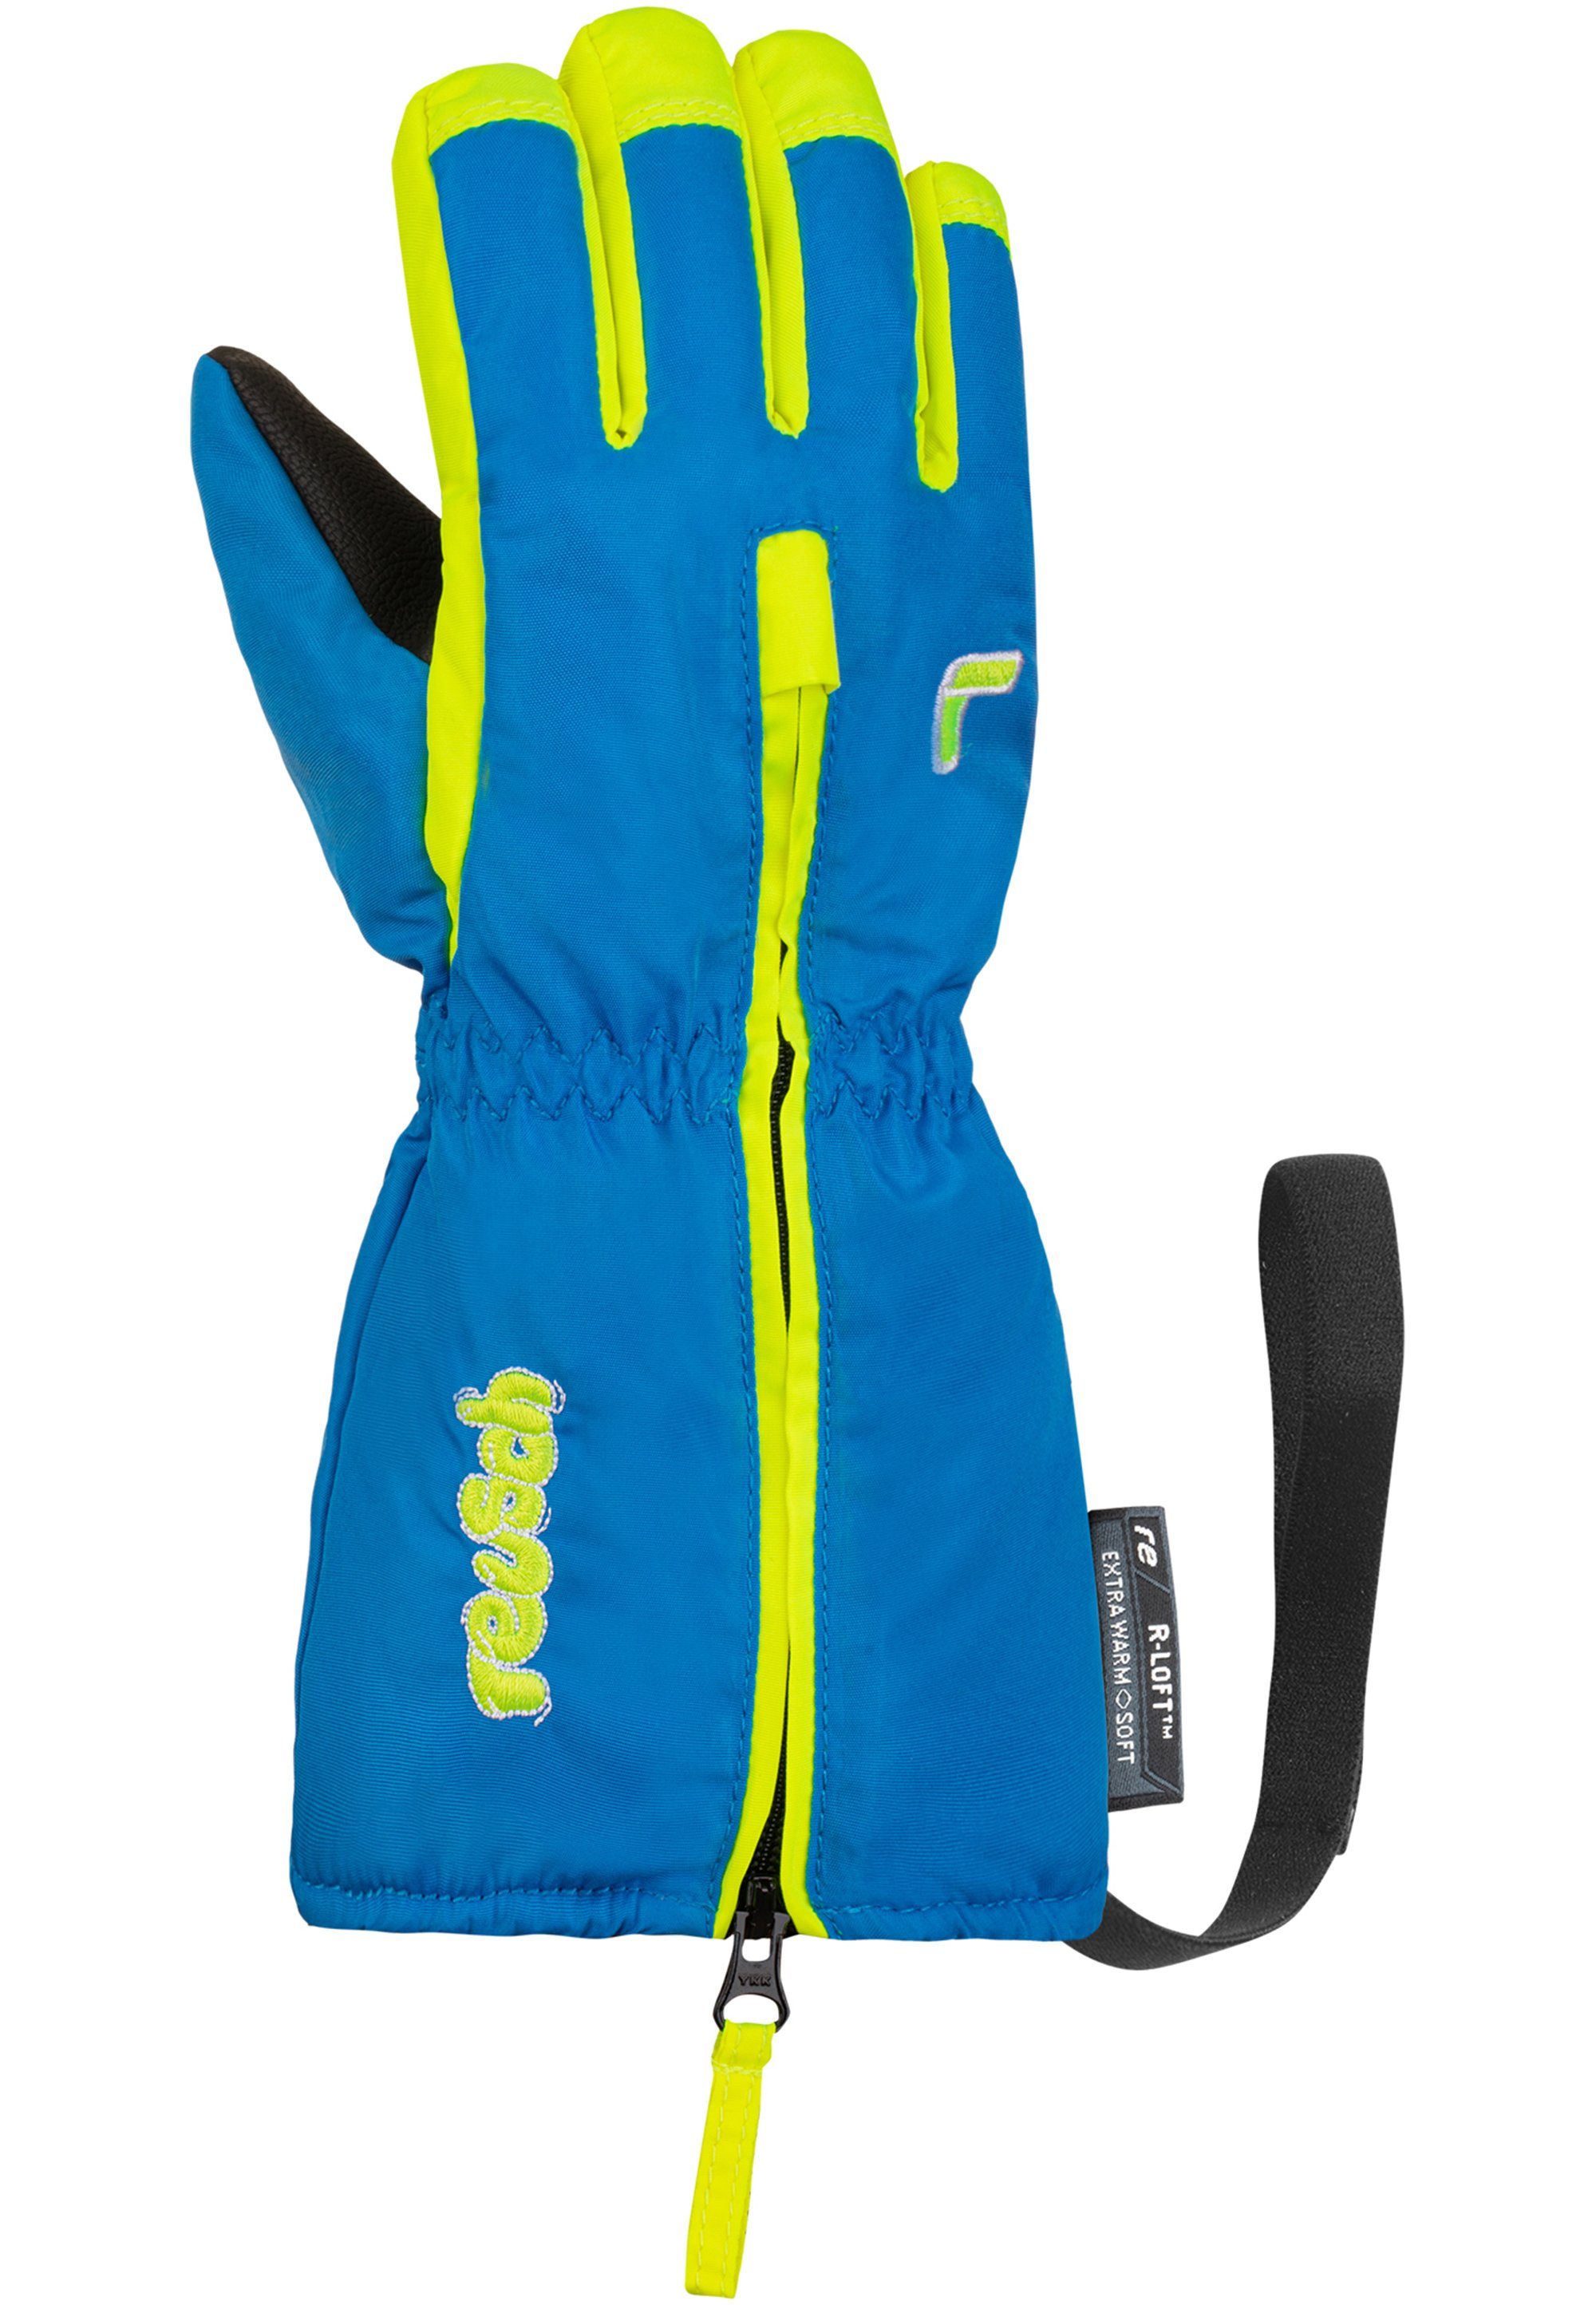 Reusch Tom gelb-blau Skihandschuhe Stulpe langer mit